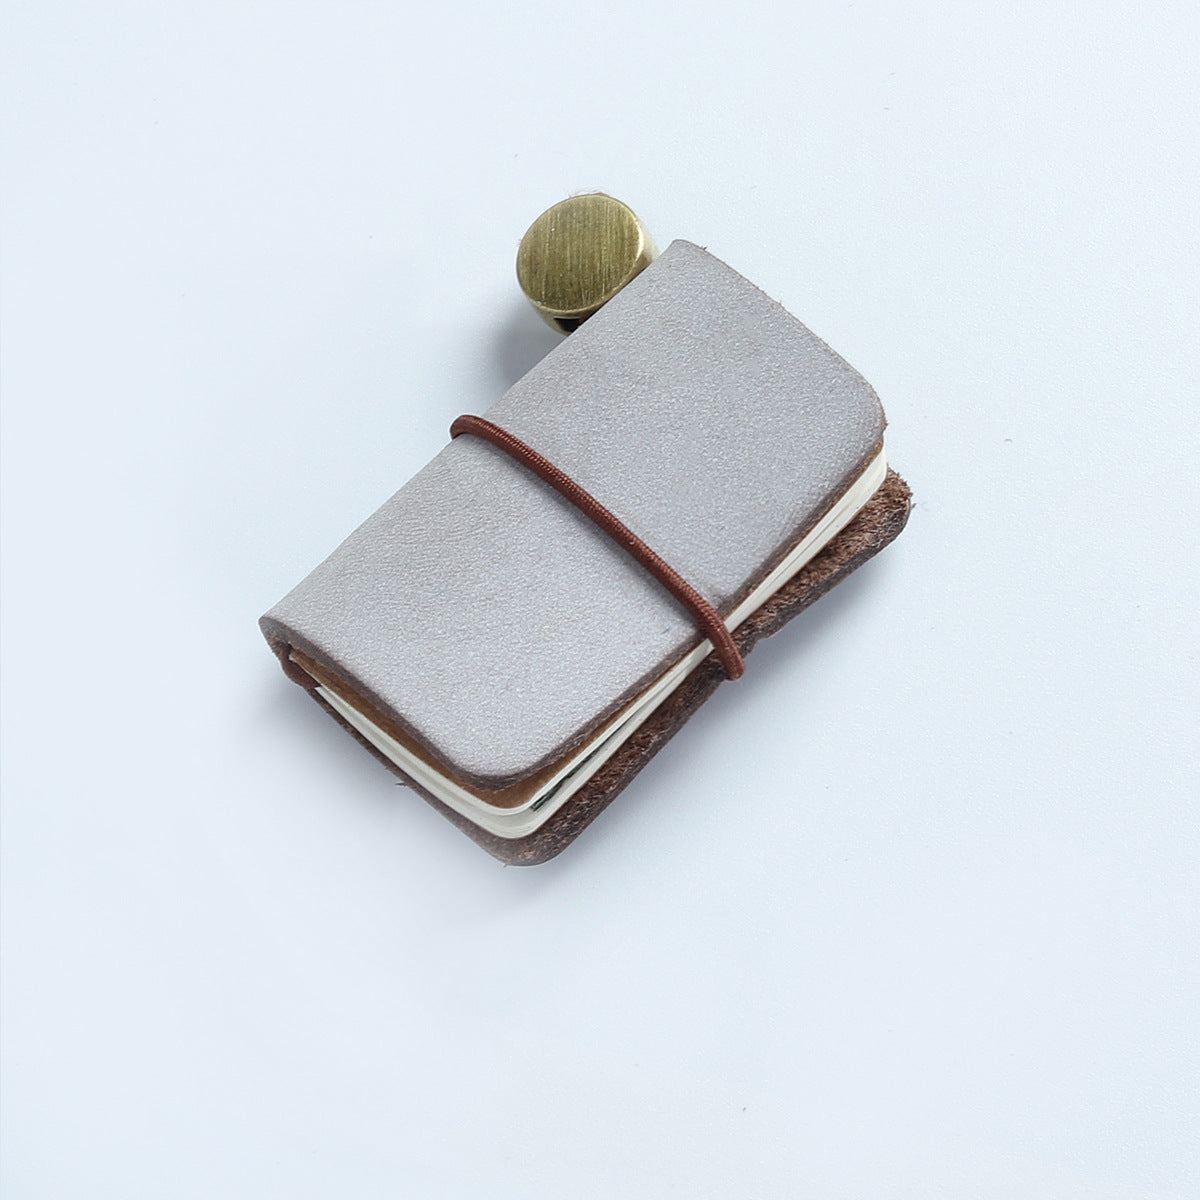 Traveler notebook Mini TN mini travel book pendant leather handmade leather hand account decoration accessories - MentorG Store